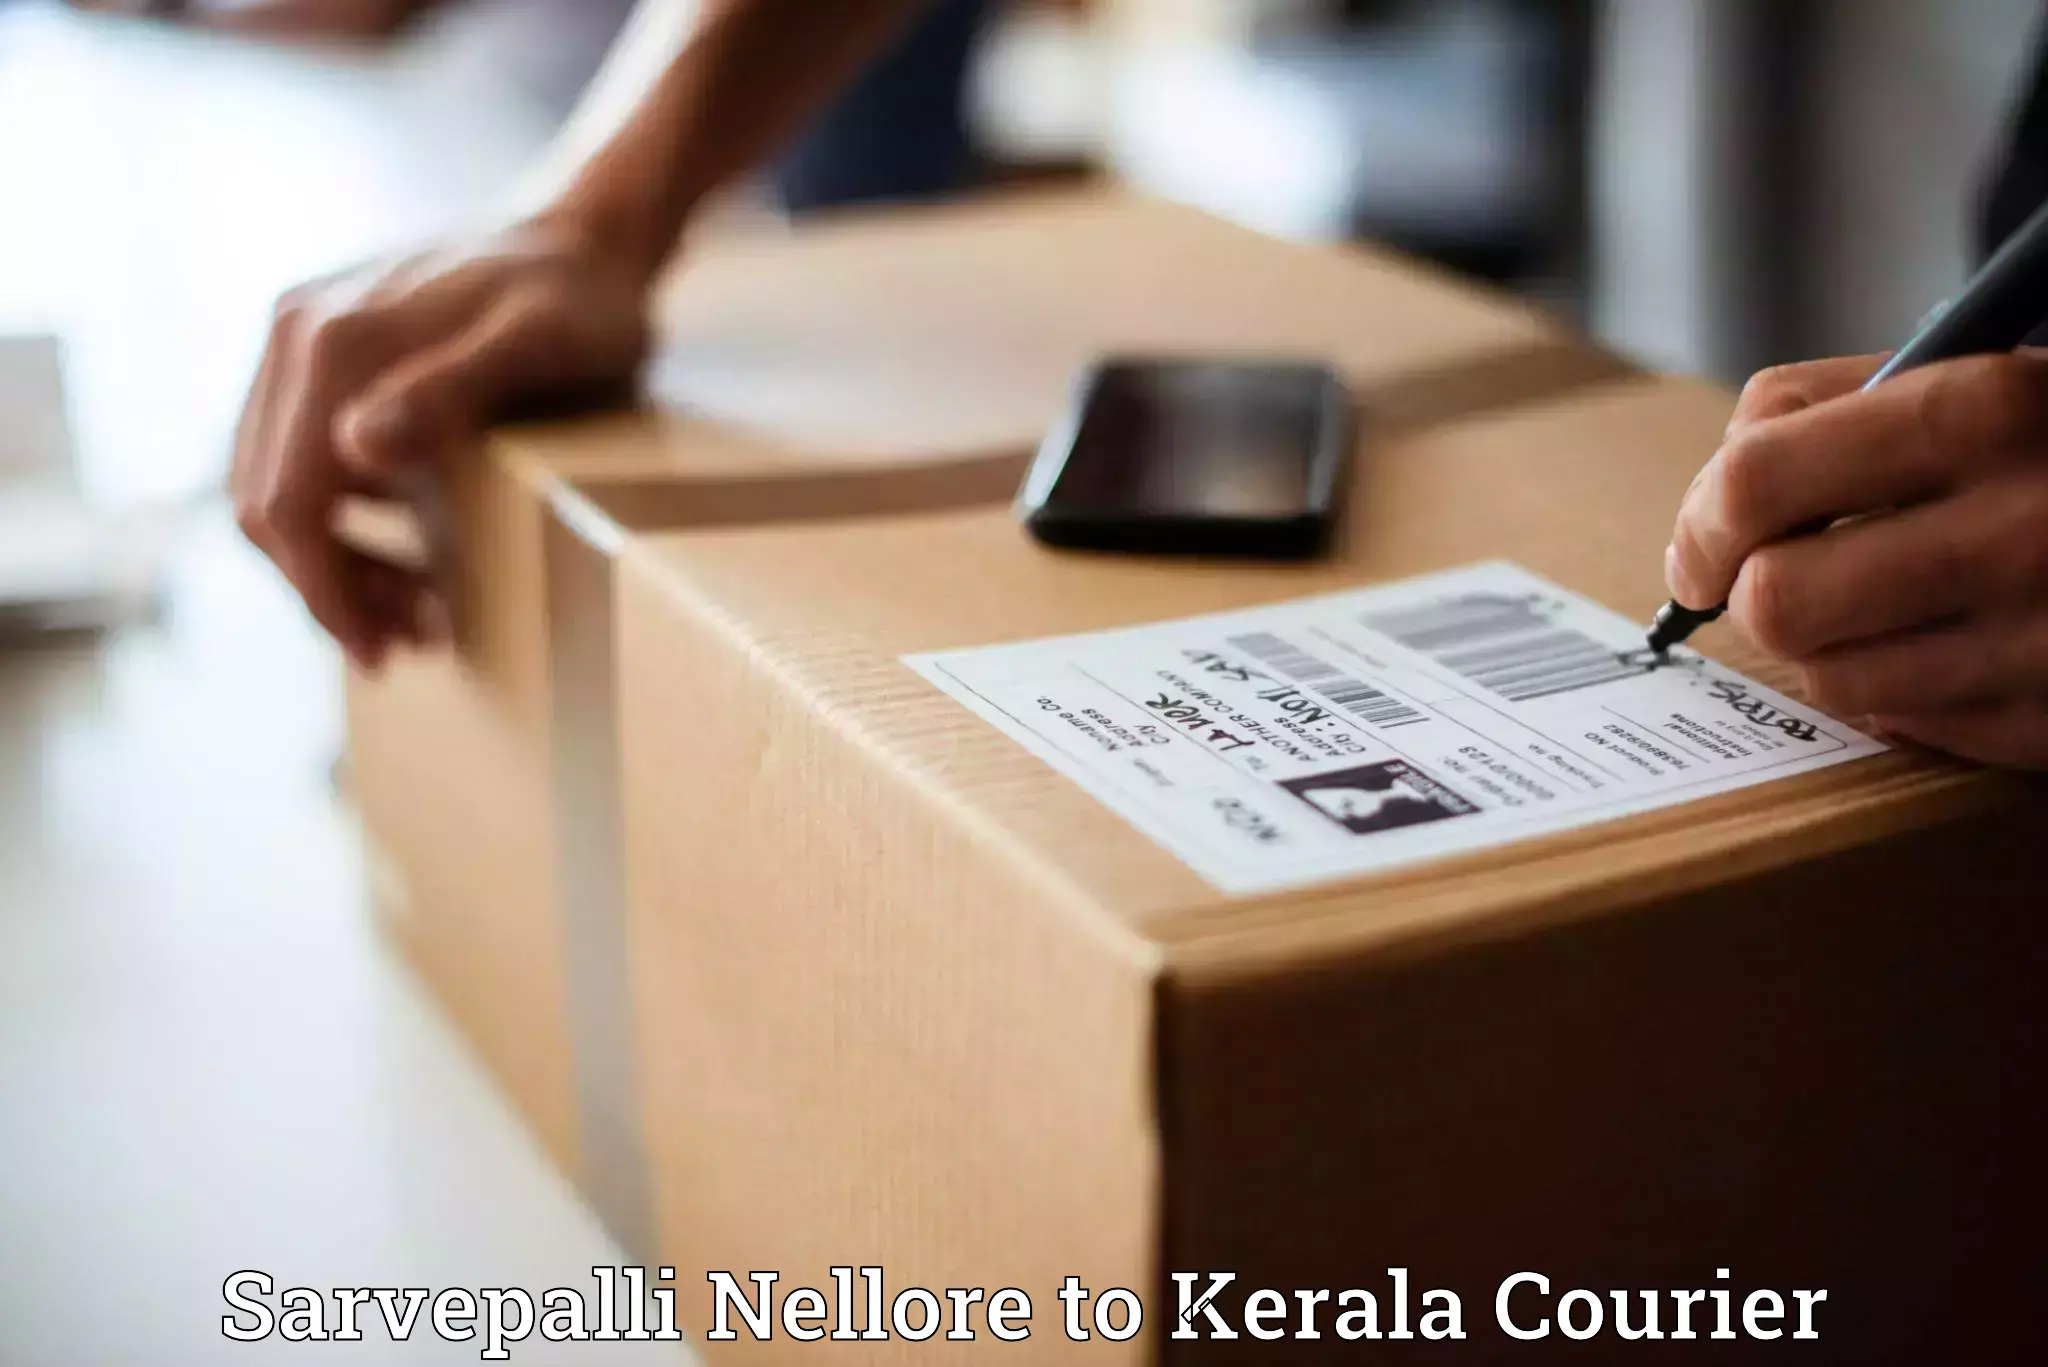 Automated parcel services Sarvepalli Nellore to Kakkayam